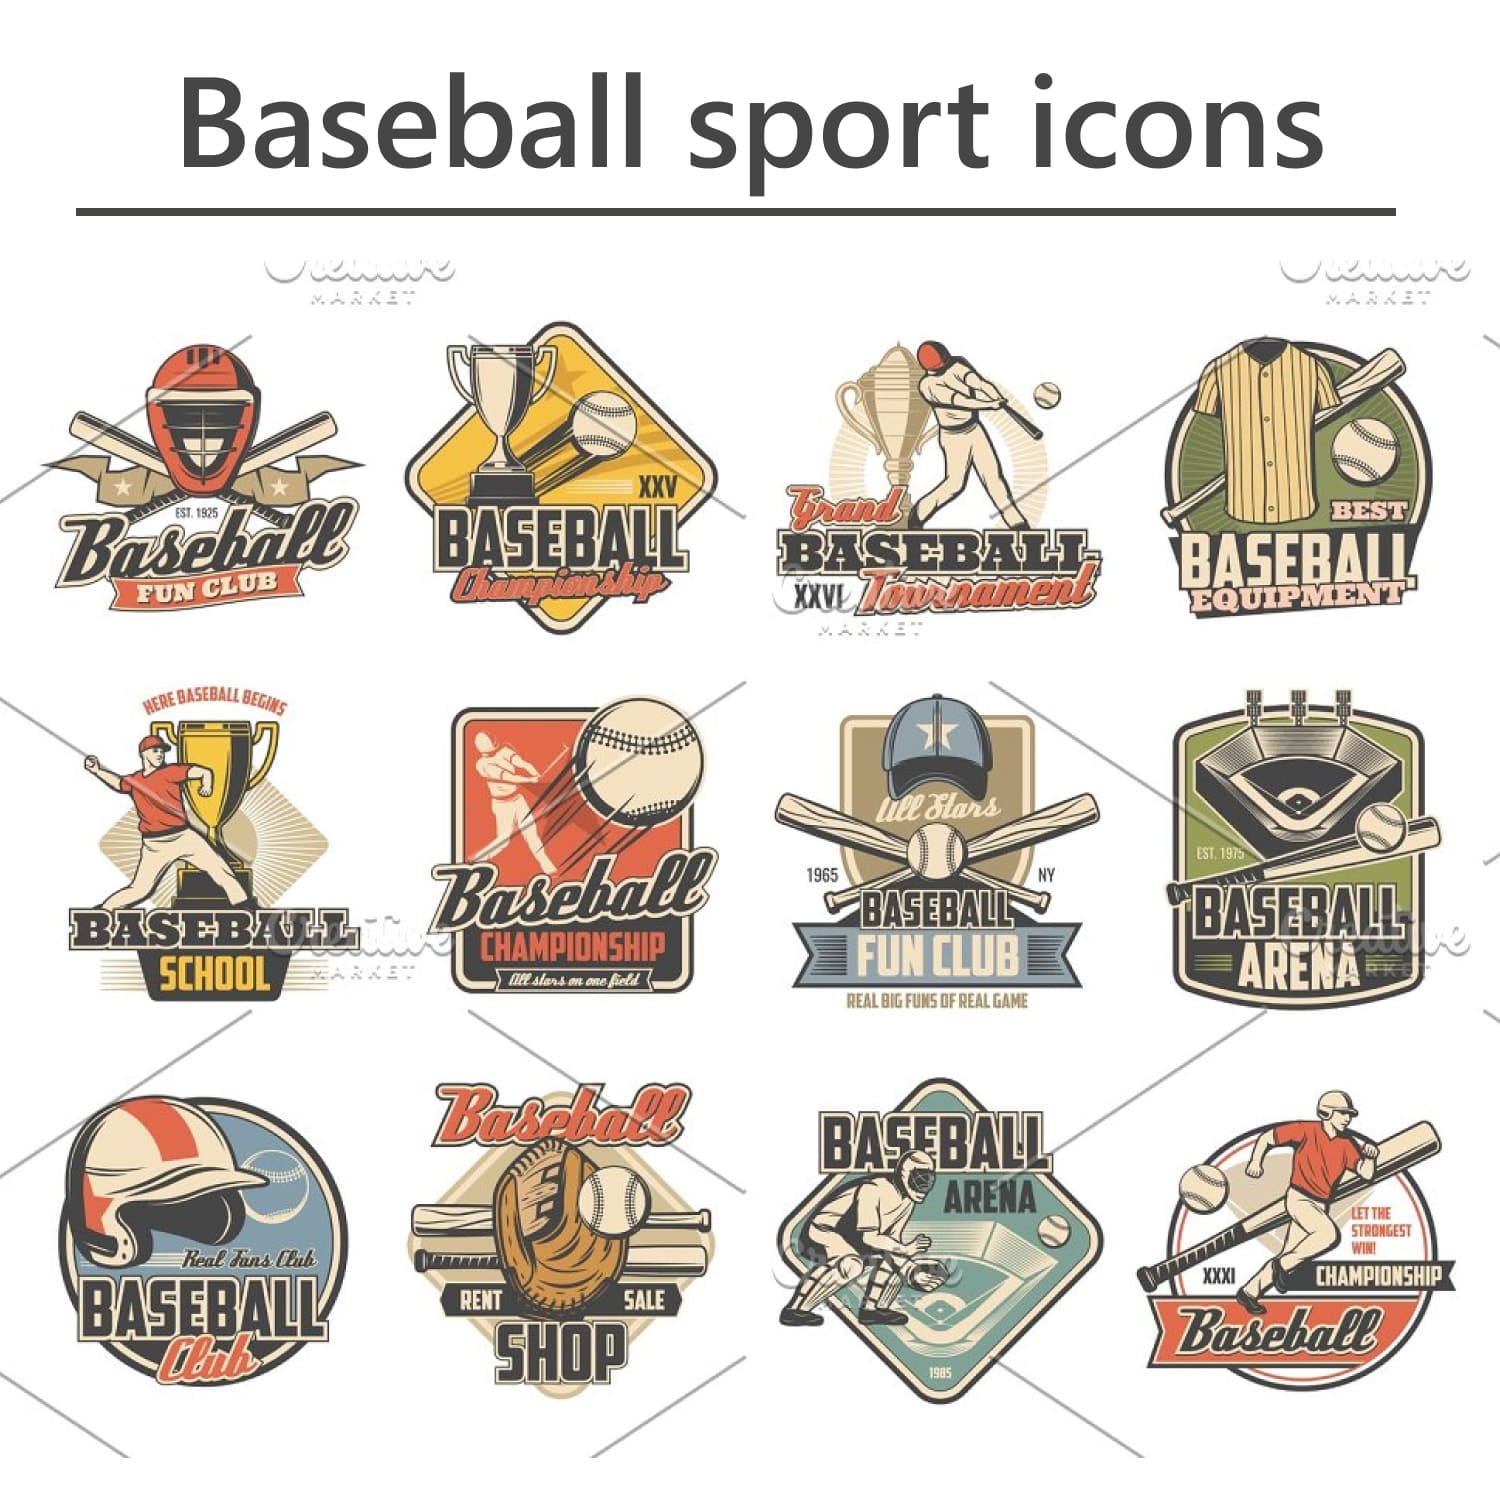 Baseball sport icons.